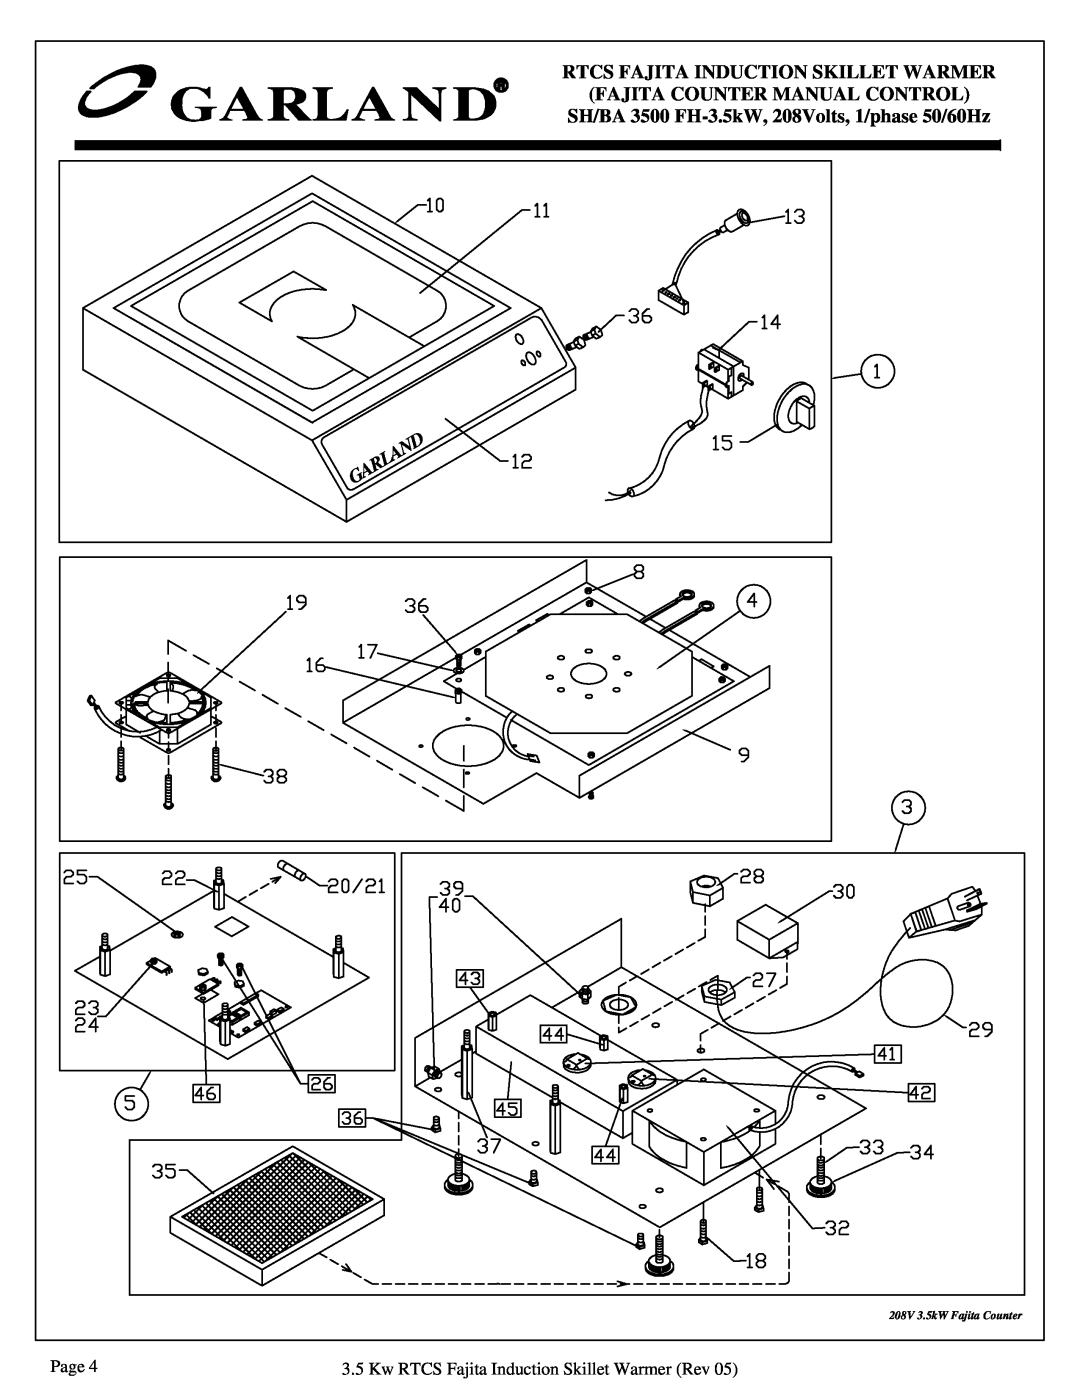 Garland 3.5 KW manual Rtcs Fajita Induction Skillet Warmer, Fajita Counter Manual Control, Page, 208V 3.5kW Fajita Counter 